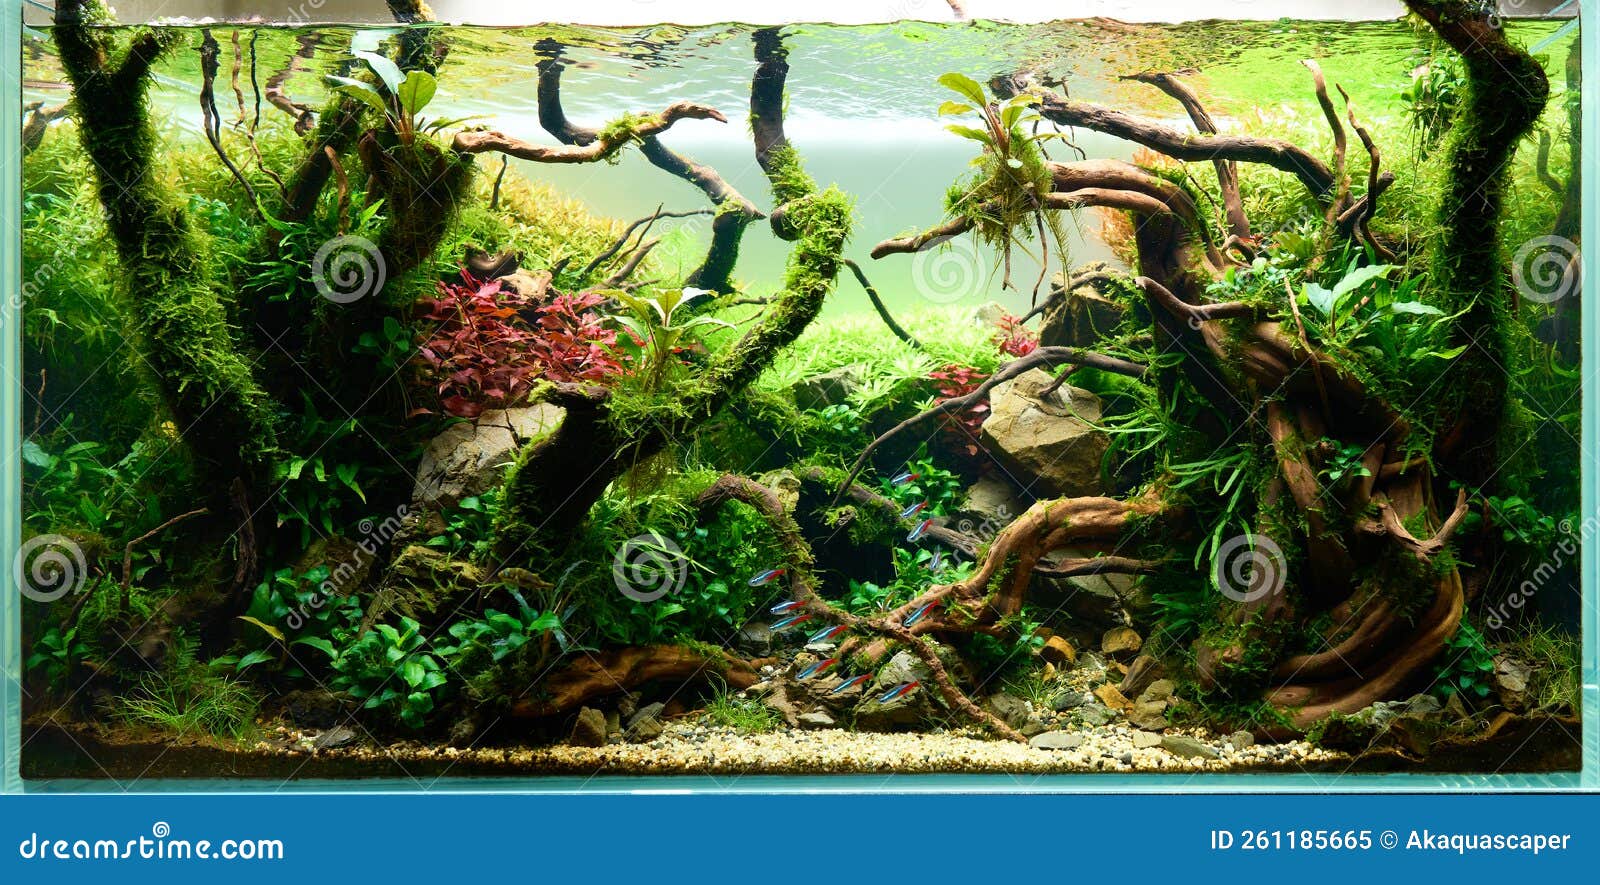 beautiful freshwater aquascape with live aquarium plants